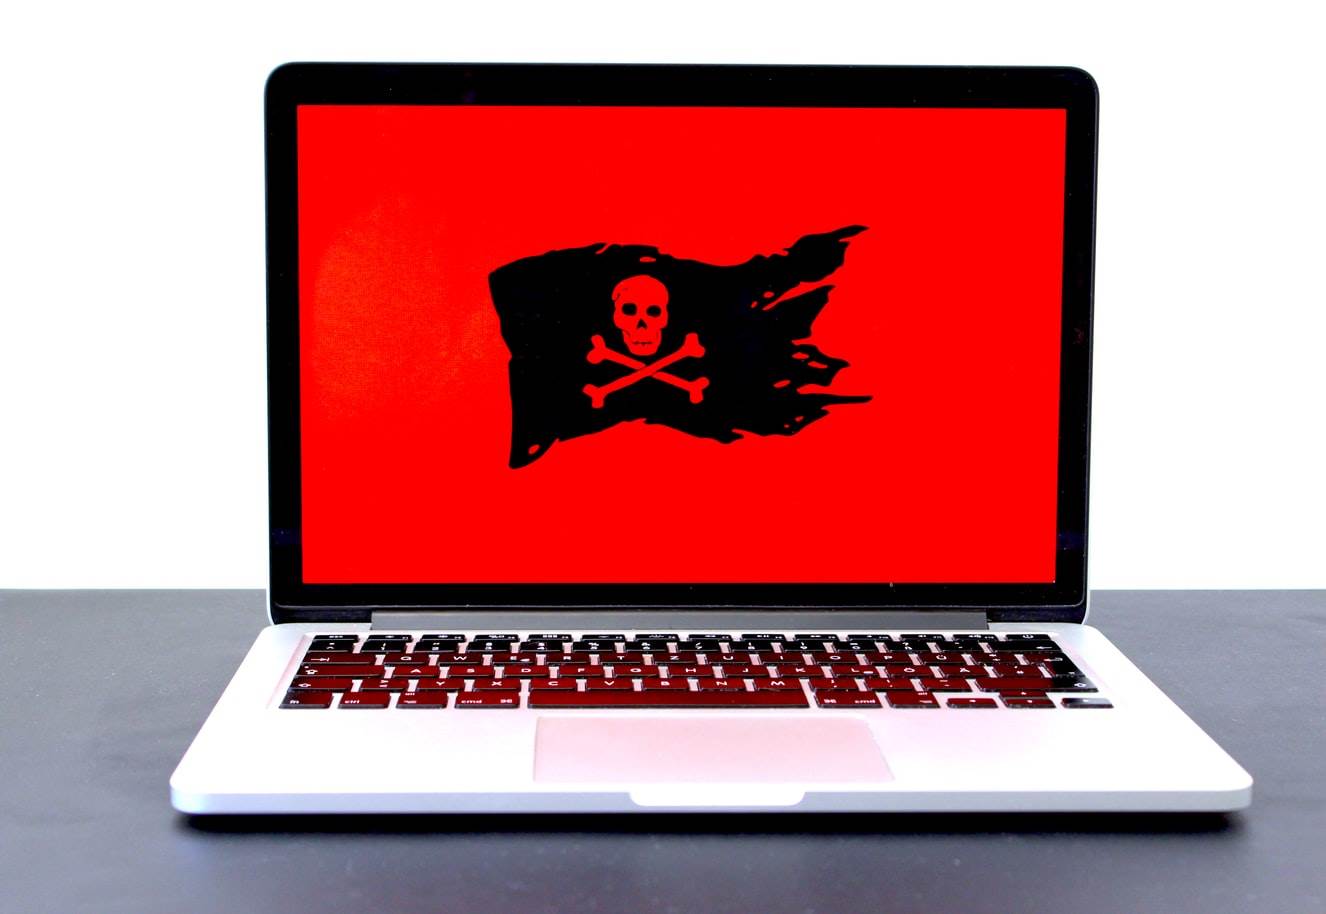  malware botnet hakeri pirati hakovanje prevara 